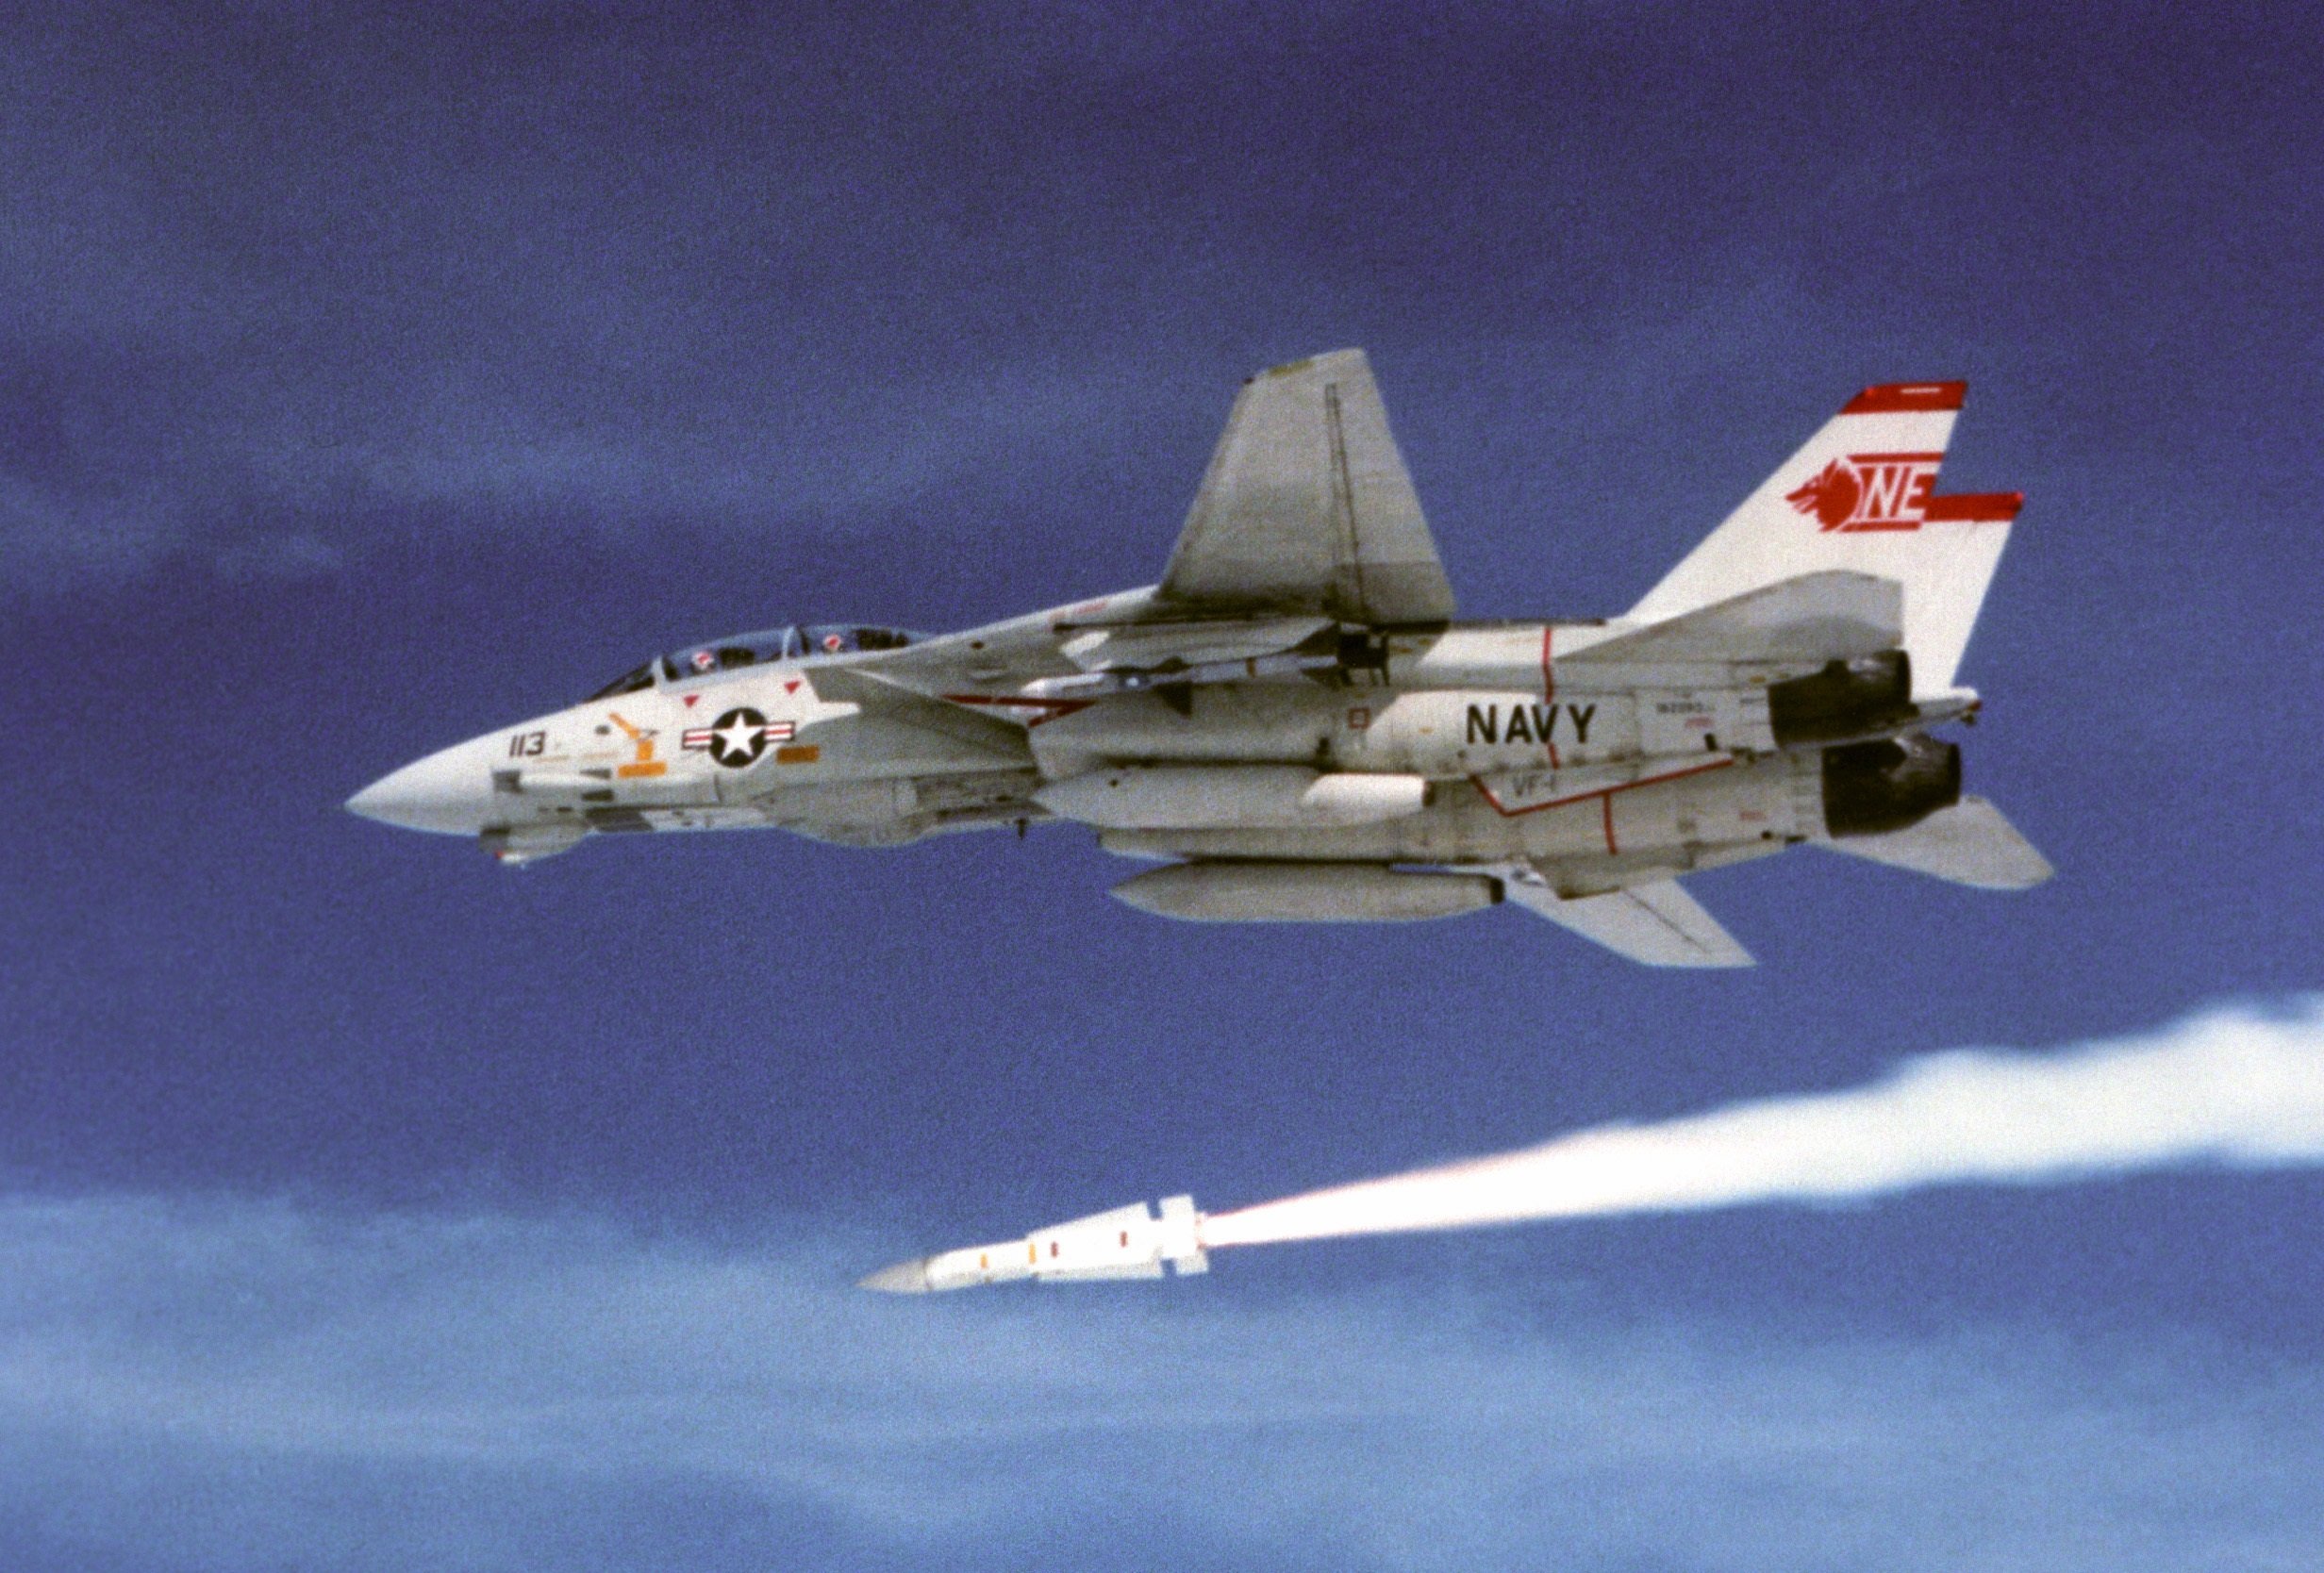 IMAGE(https://nationalinterest.org/sites/default/files/main_images/F-14A_VF-1_launching_AIM-54_Phoenix.jpg)